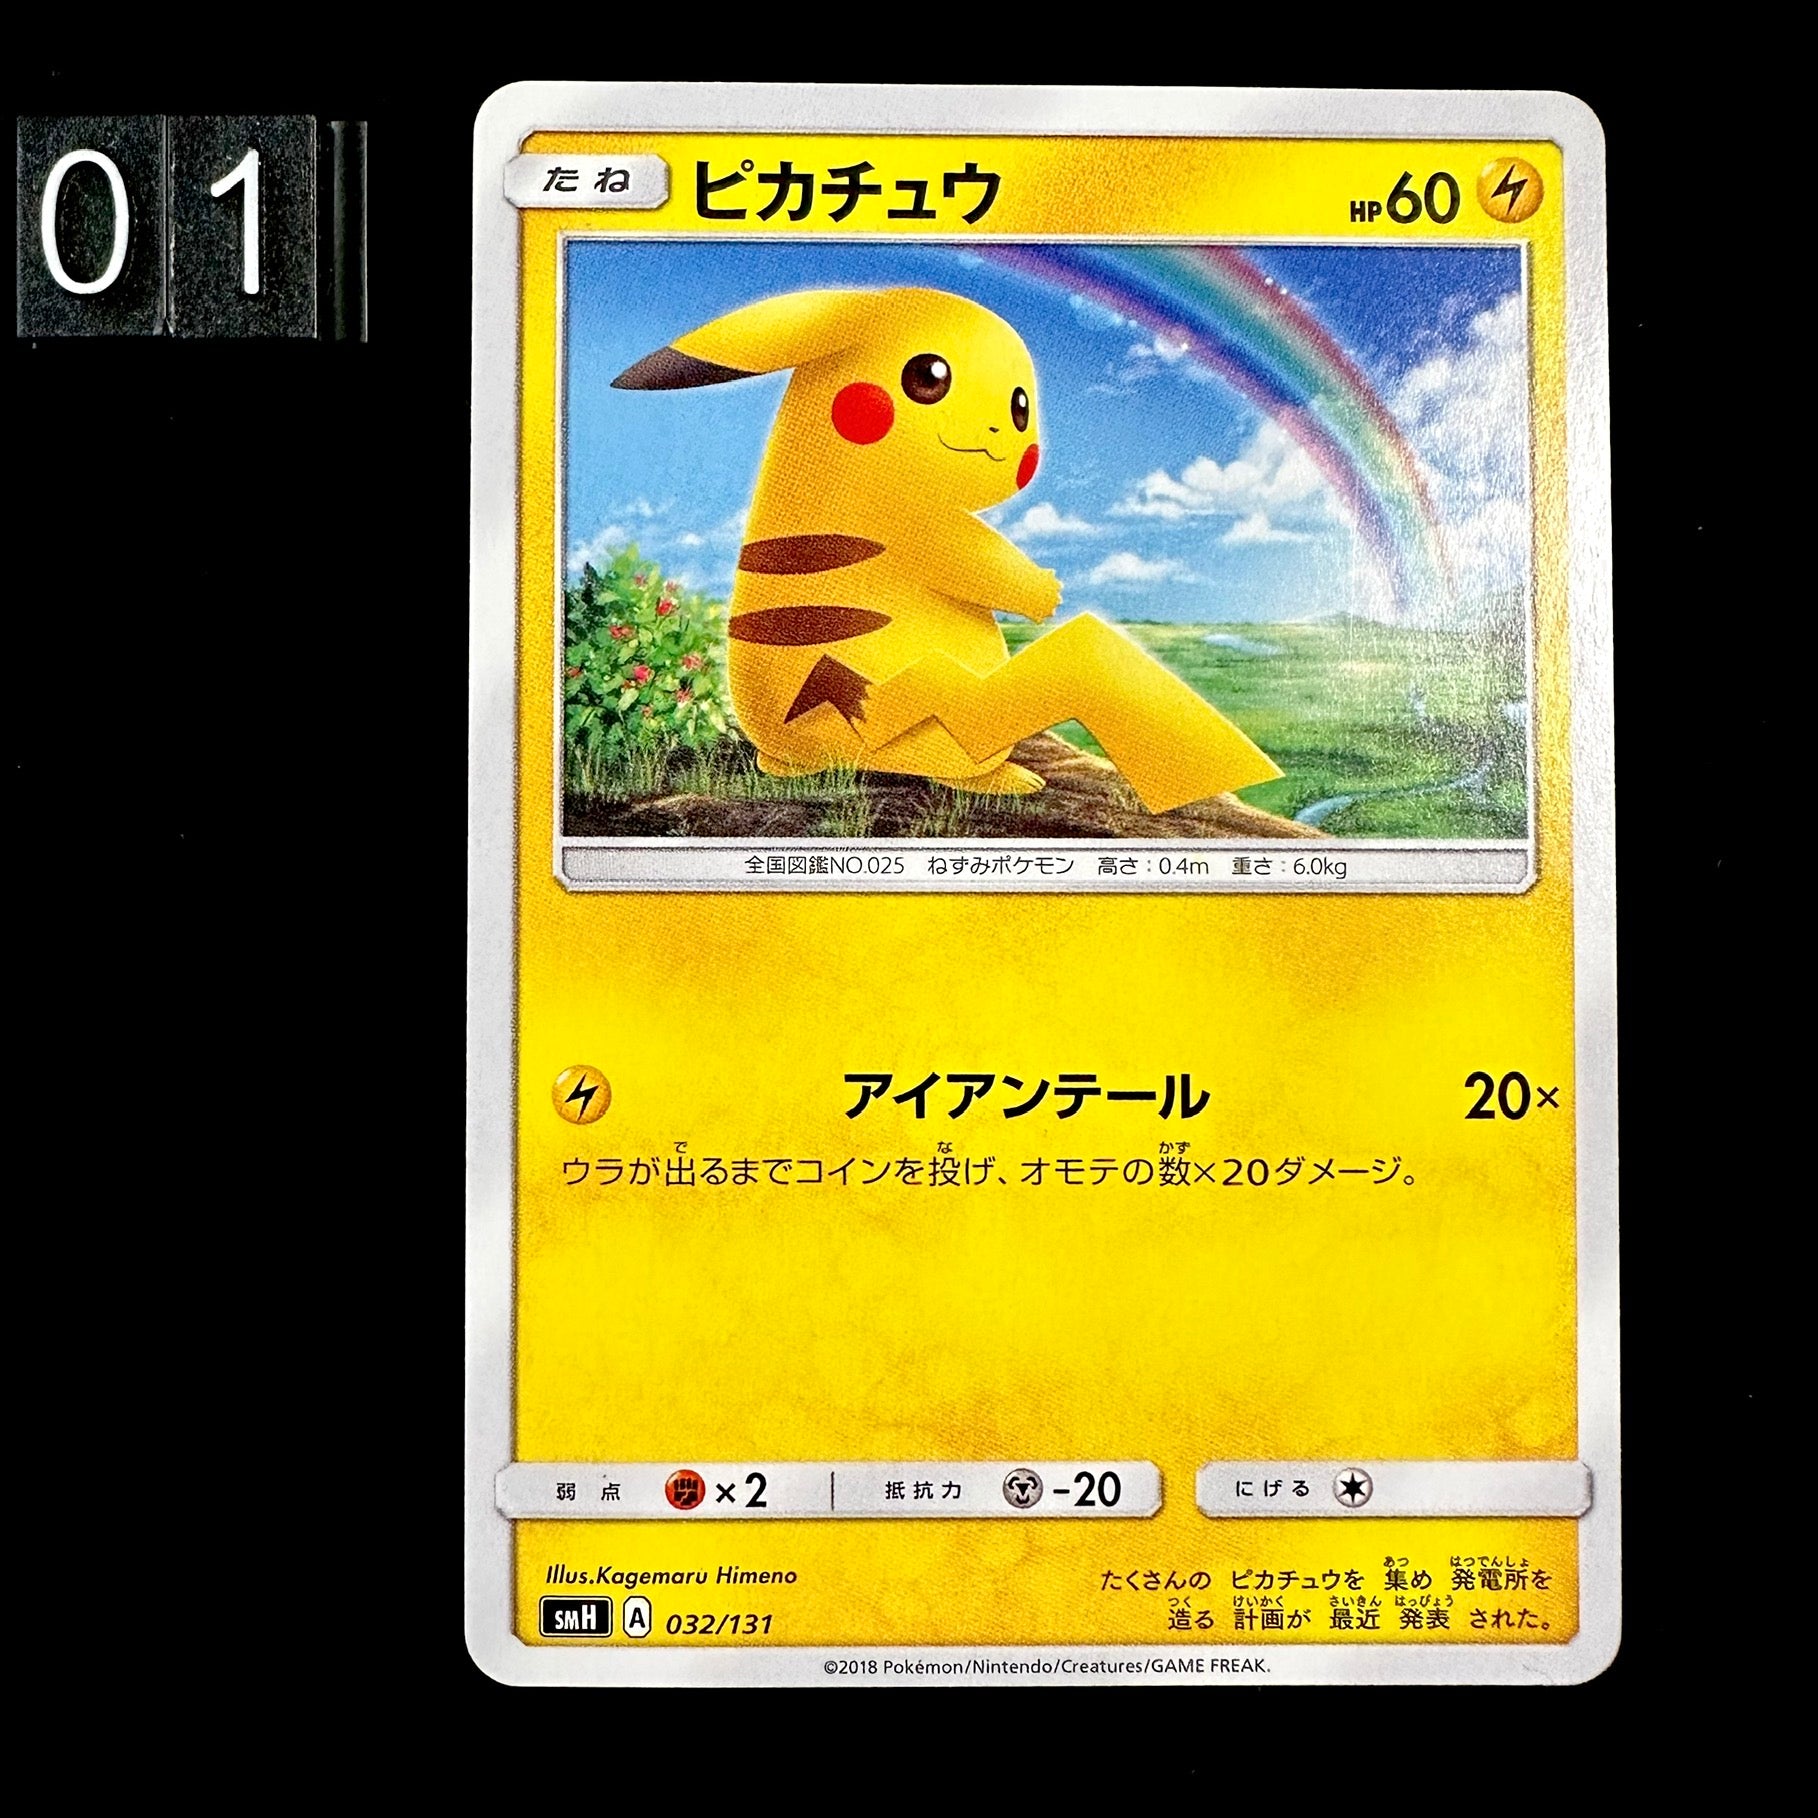 POKEMON CARD GAME Pikachu SMH 032/131 - GX starter decks